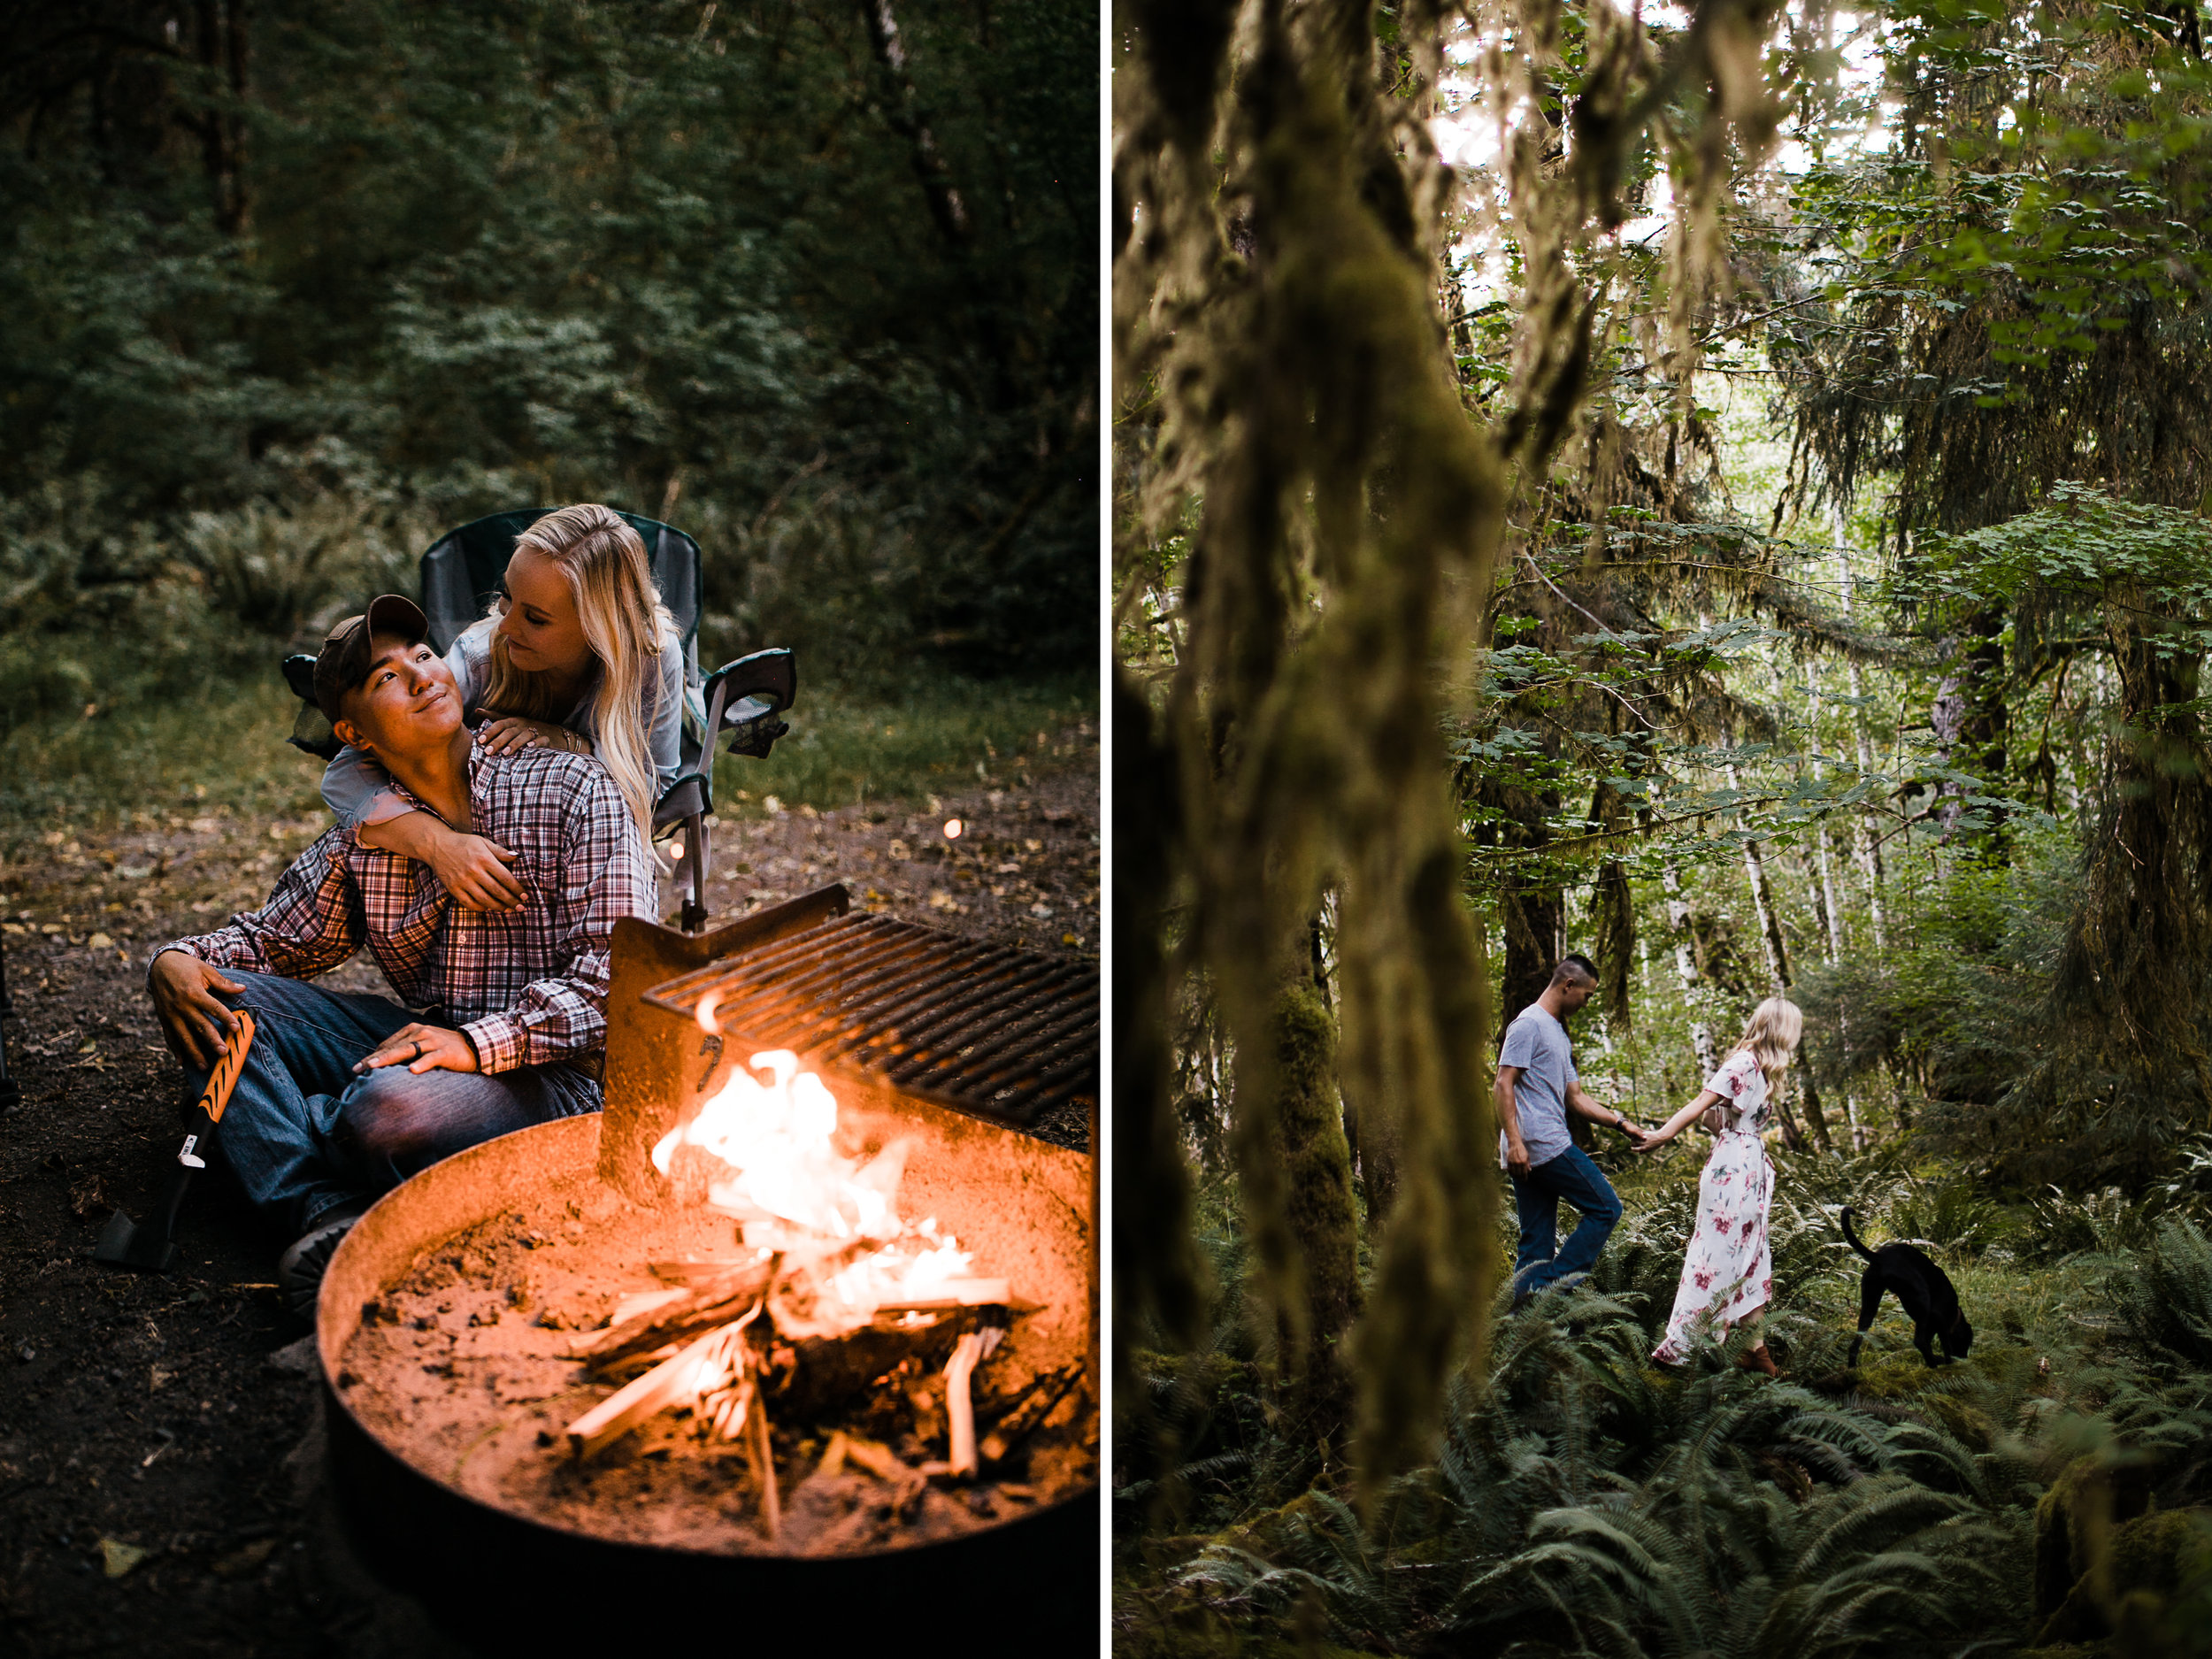 morgan + alex's engagement session in olympic national park | hoh rainforest campsite session | washington adventure wedding photographer